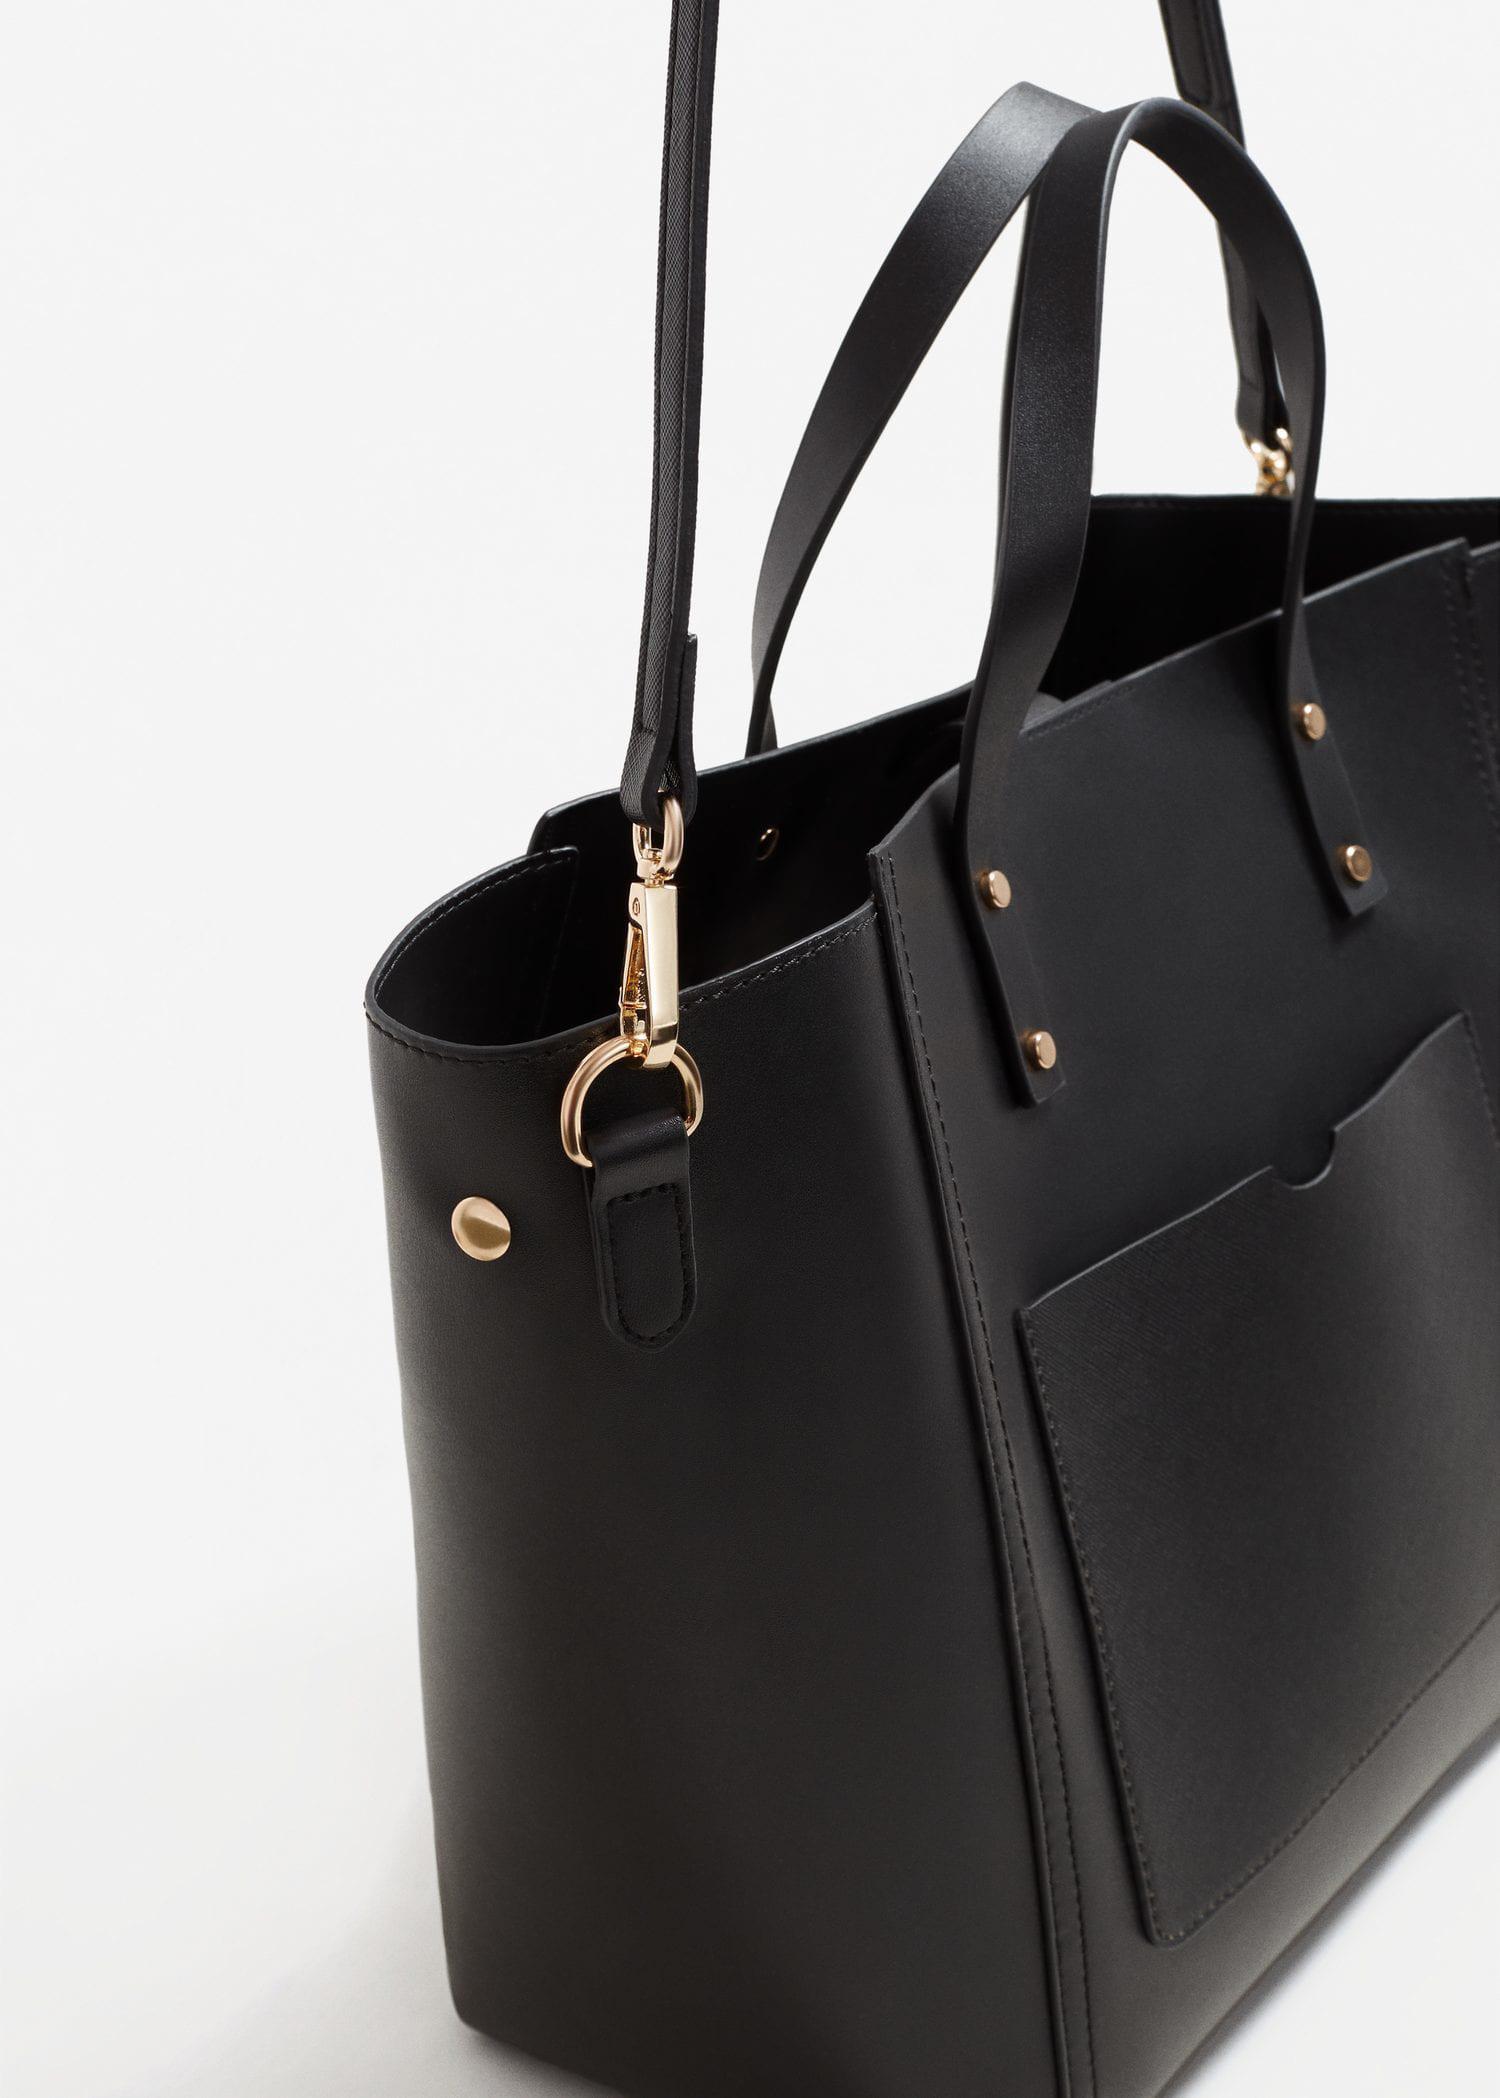 Mango Leather Pebbled Shopper Bag in Black - Lyst